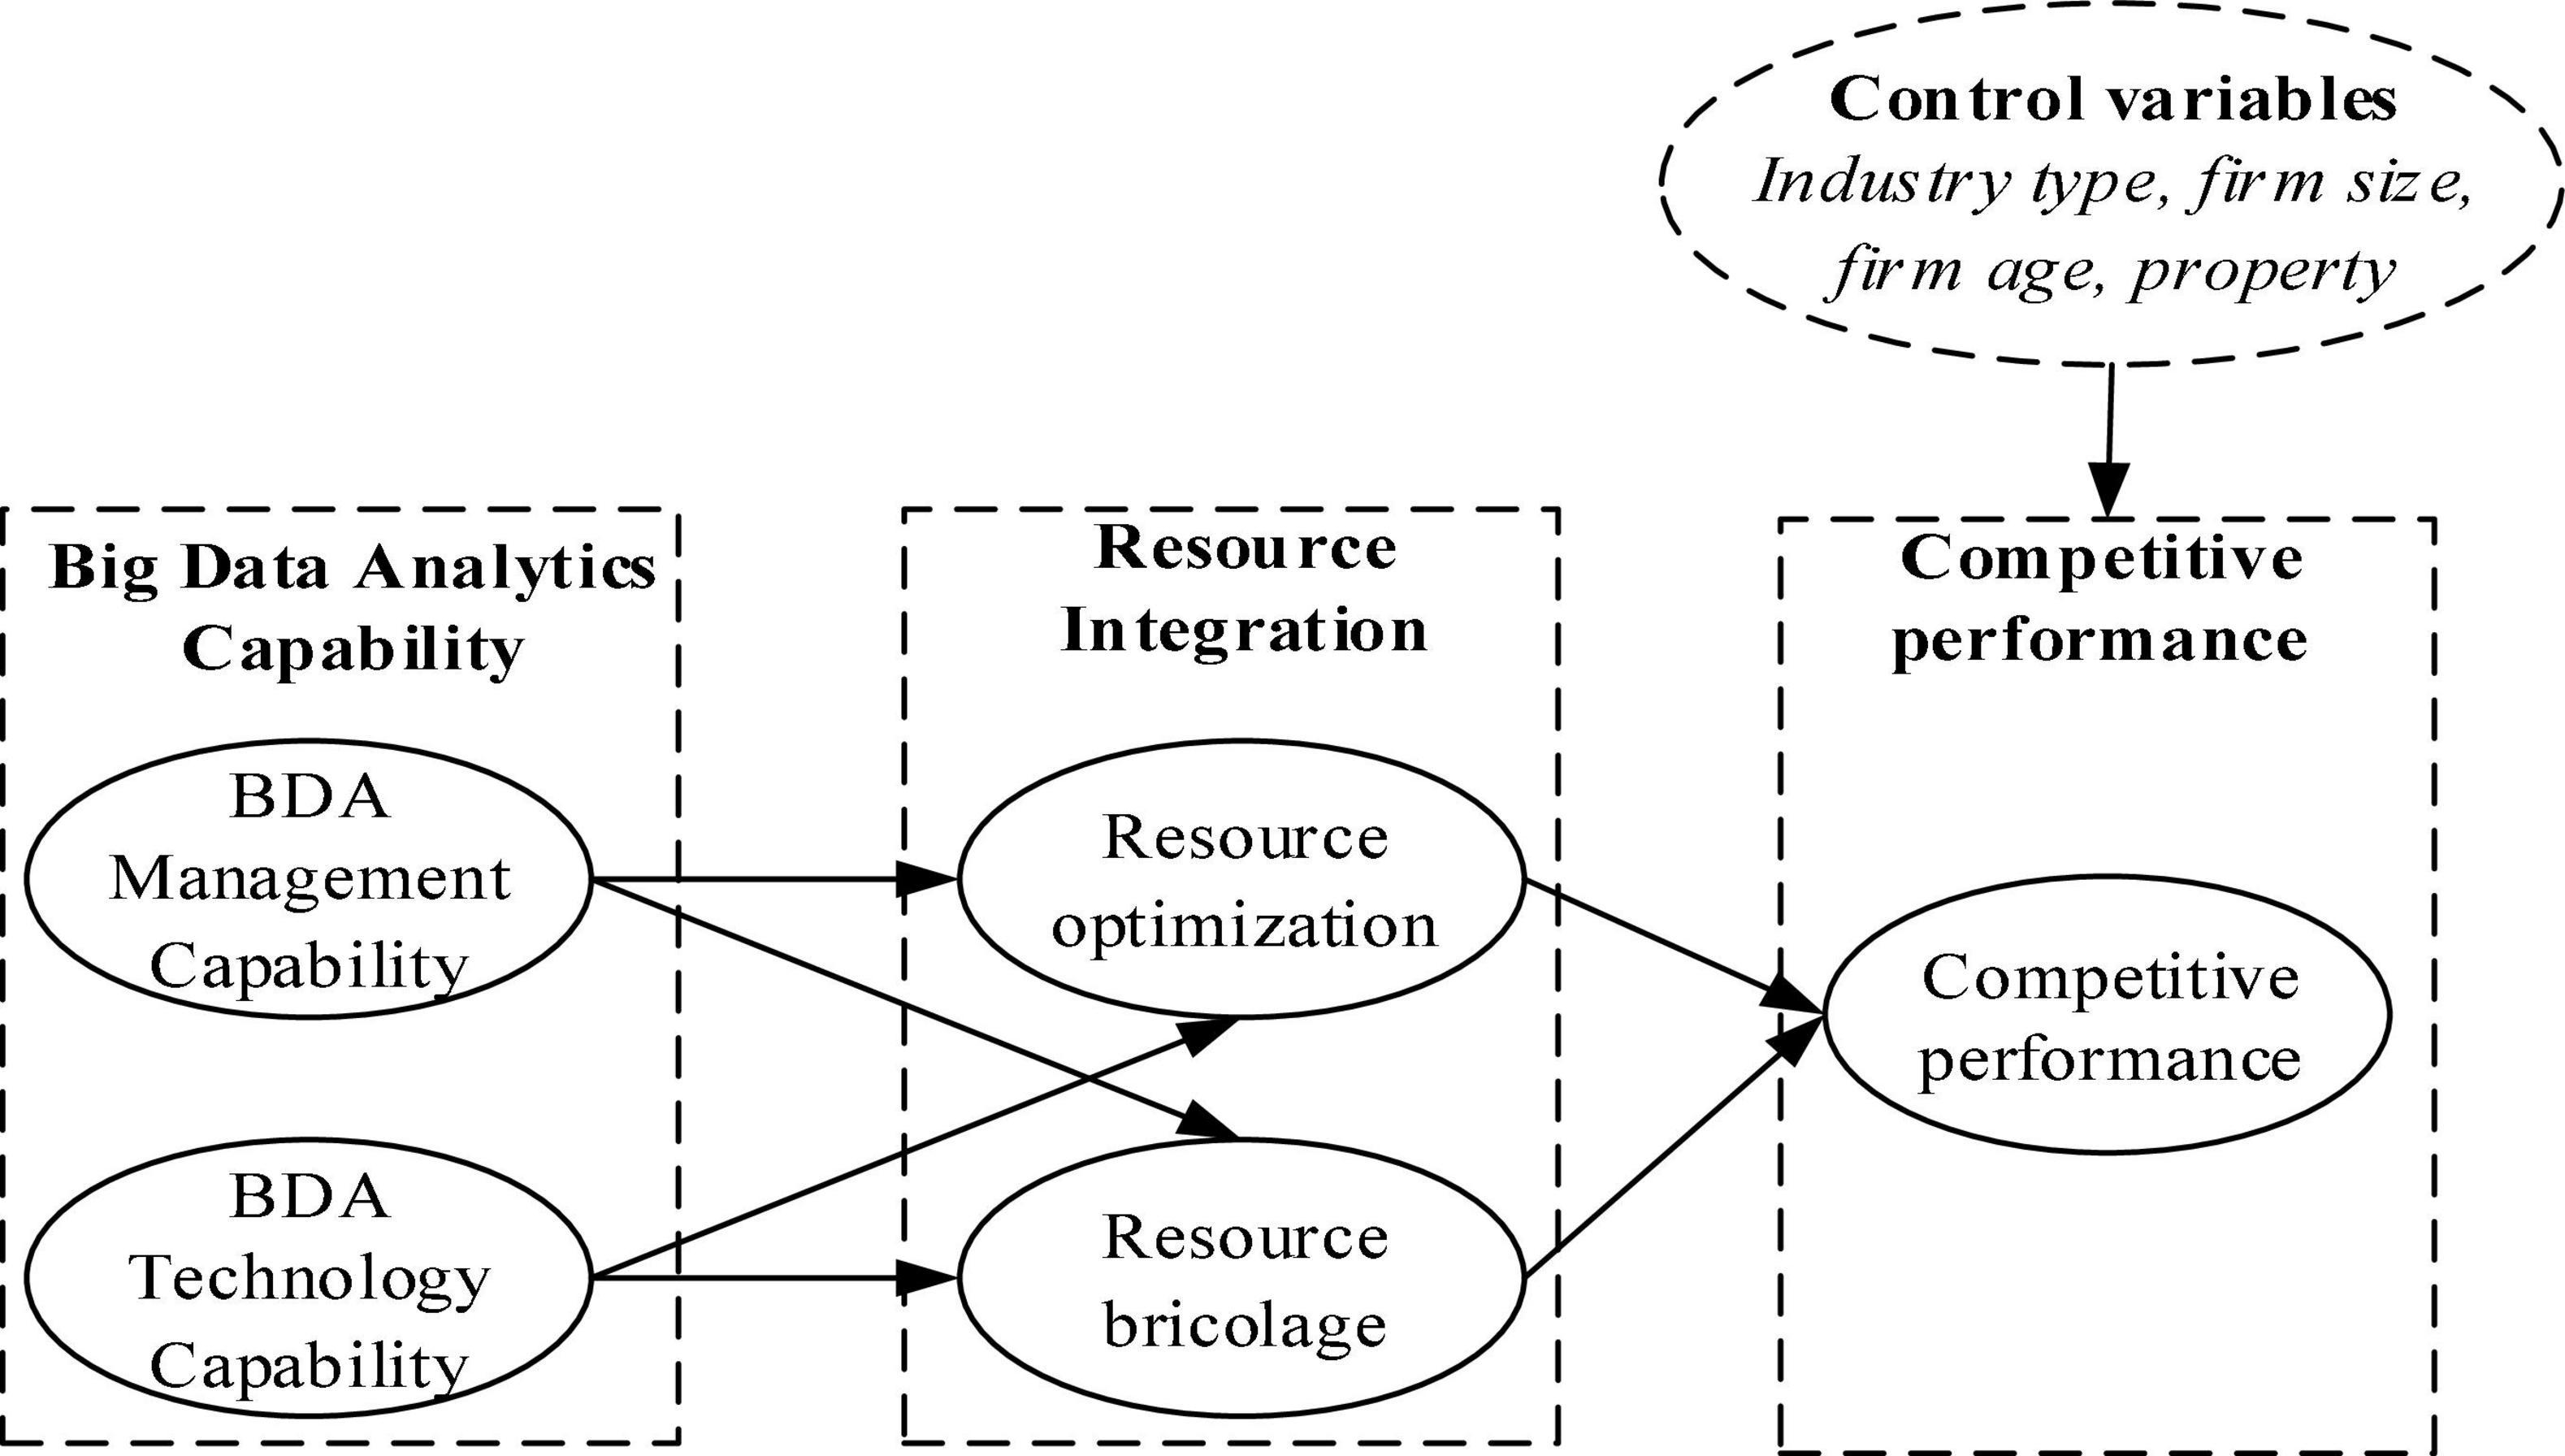 Nexus research logic model. ß The National Center for